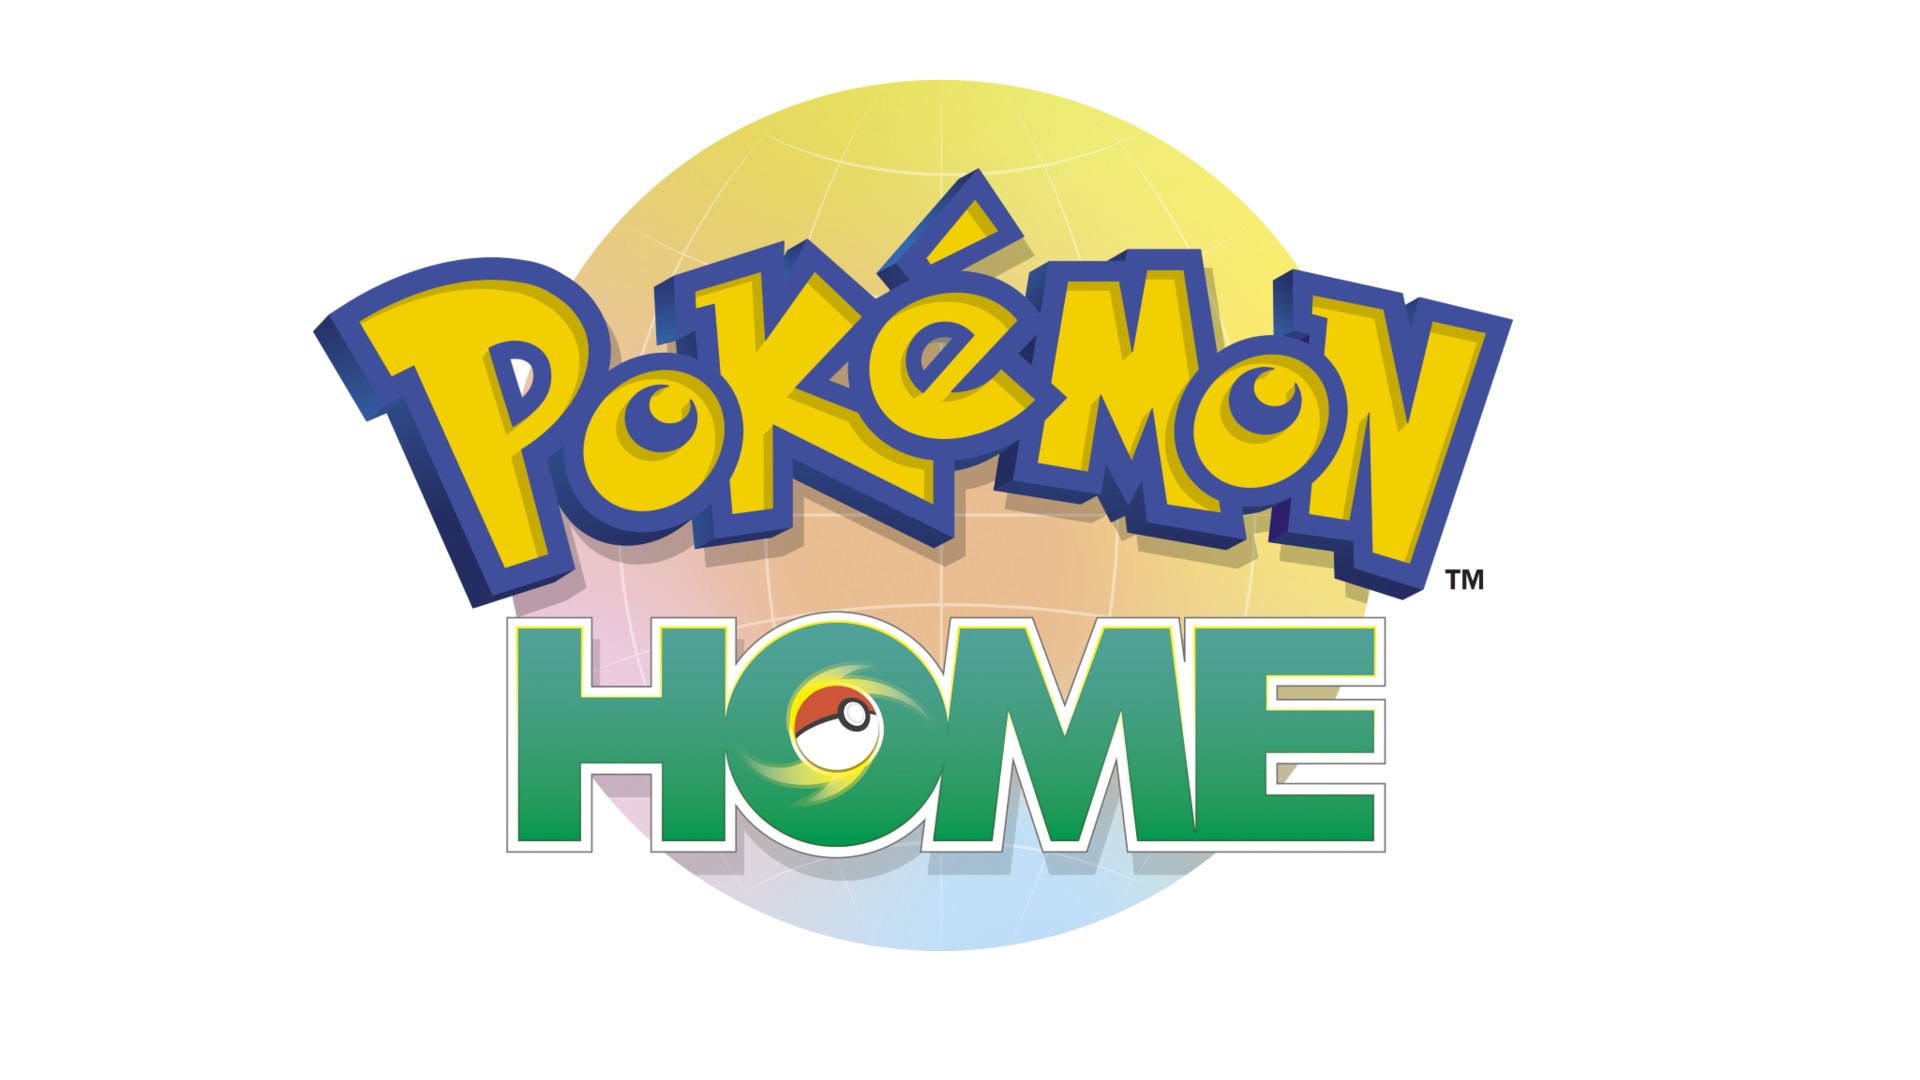 Pokémon home logo